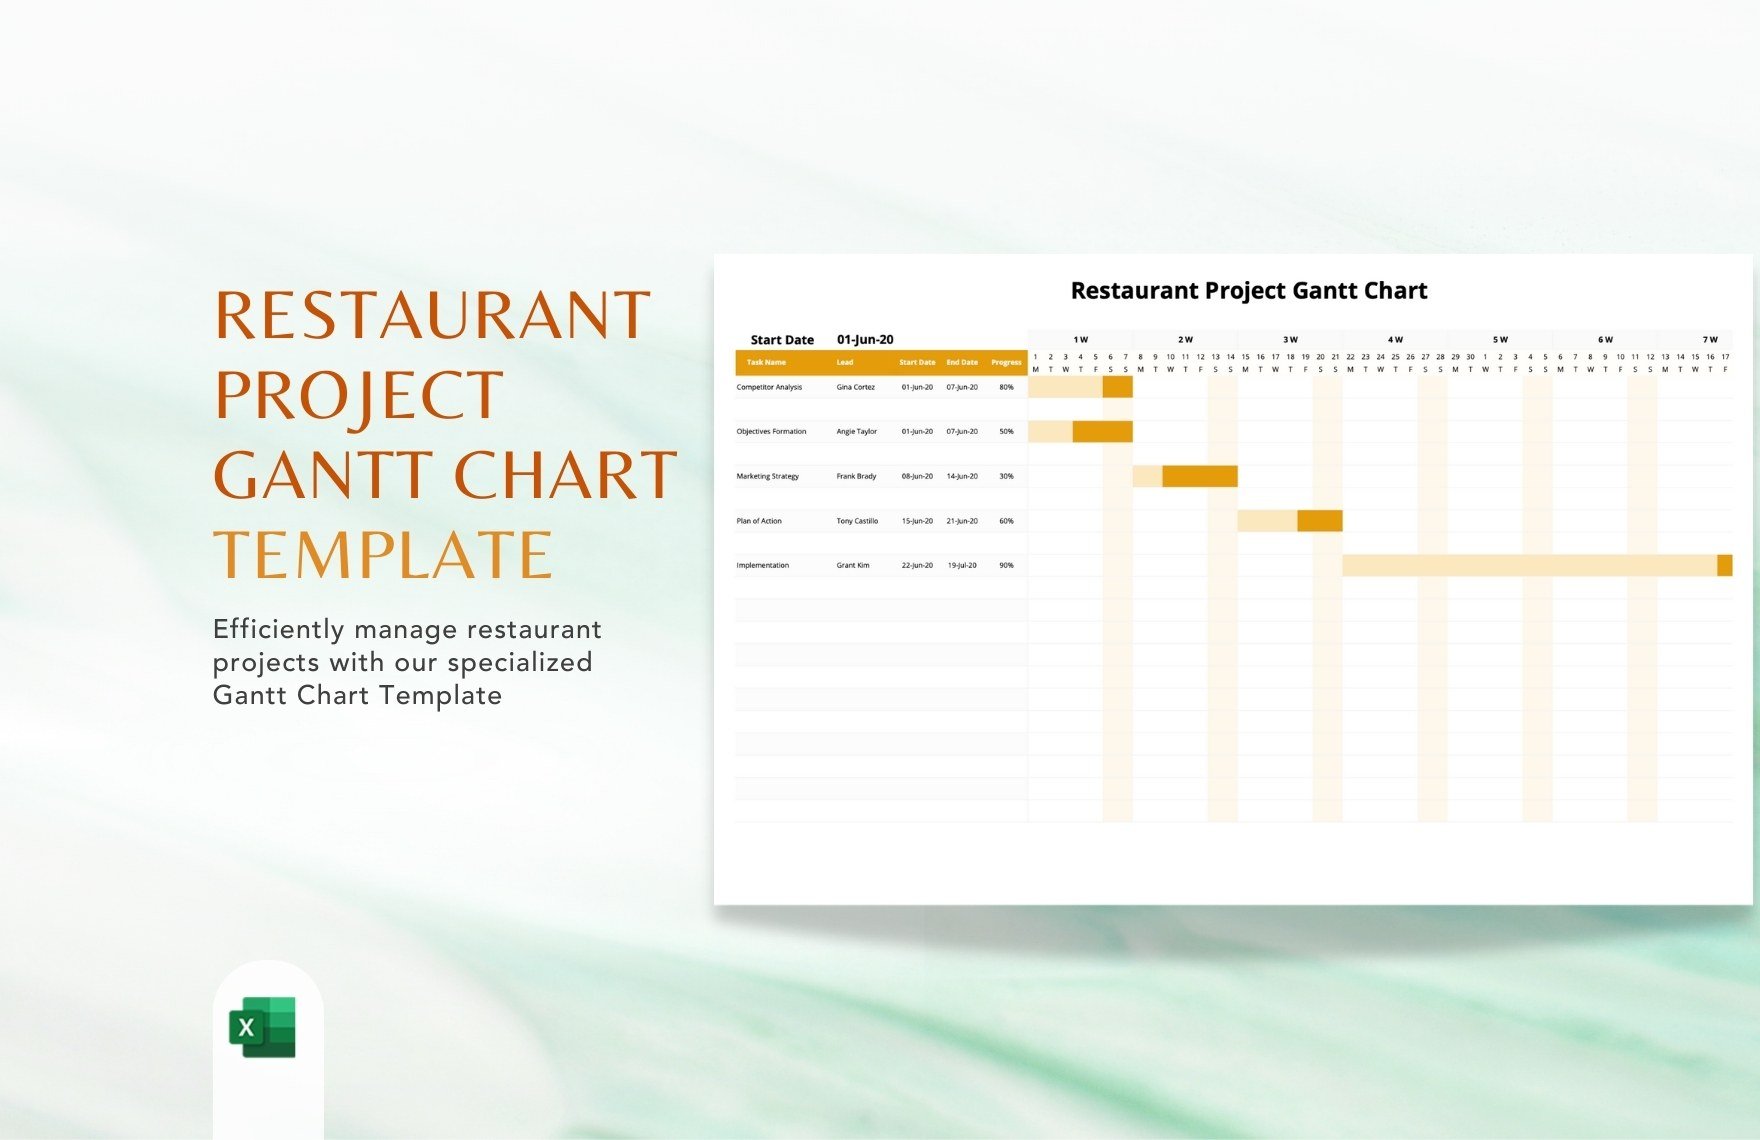 Restaurant Project Gantt Chart Template in Excel